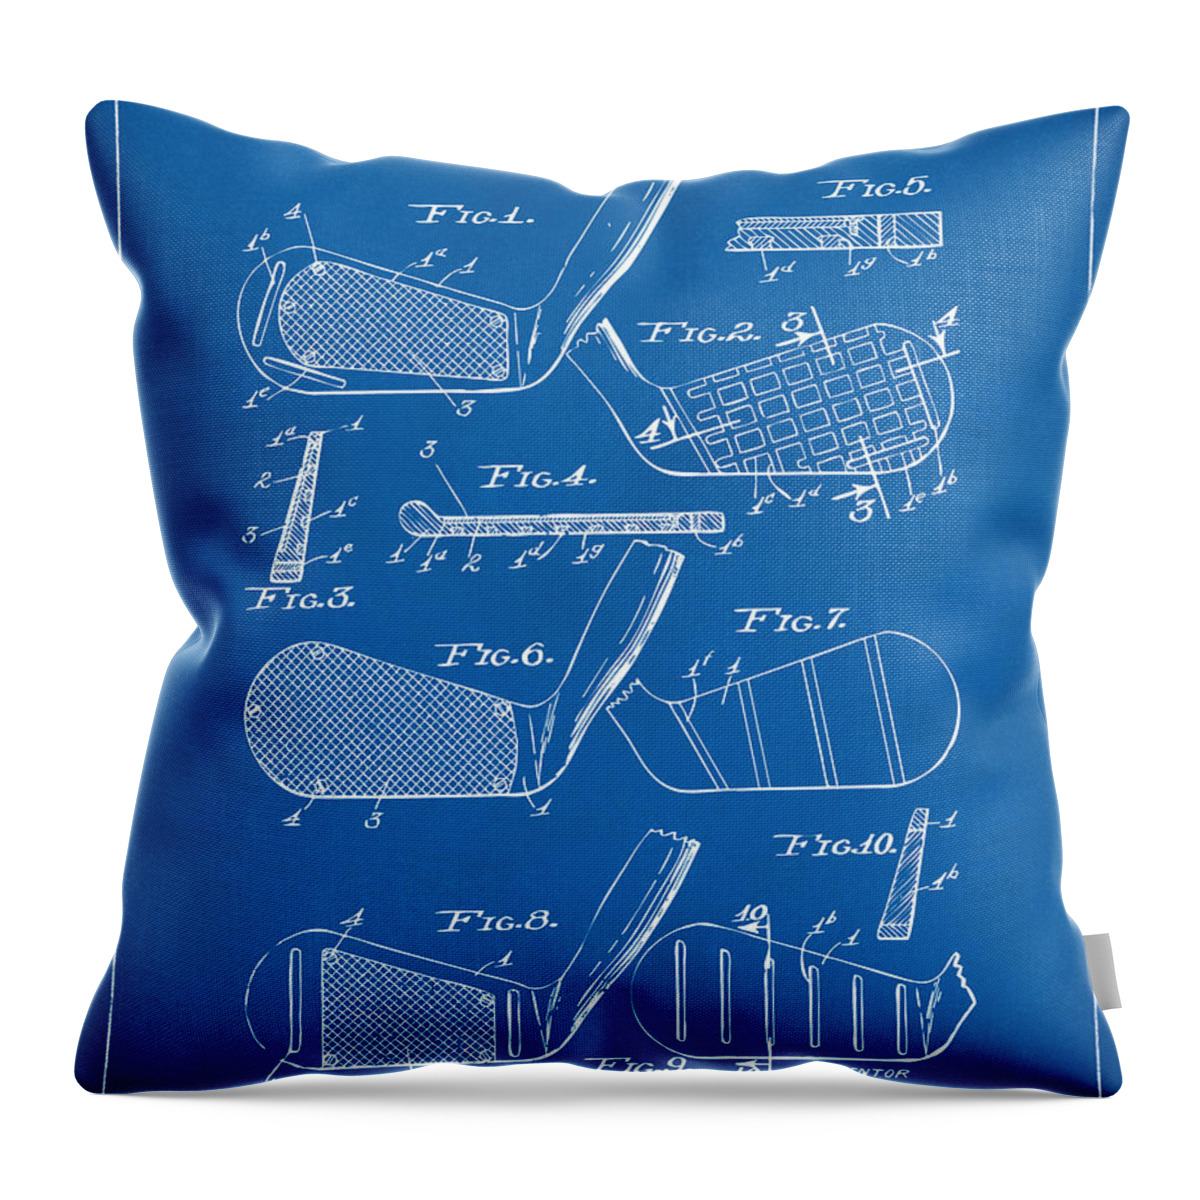 Golf Throw Pillow featuring the digital art 1936 Golf Club Patent Blueprint by Nikki Marie Smith